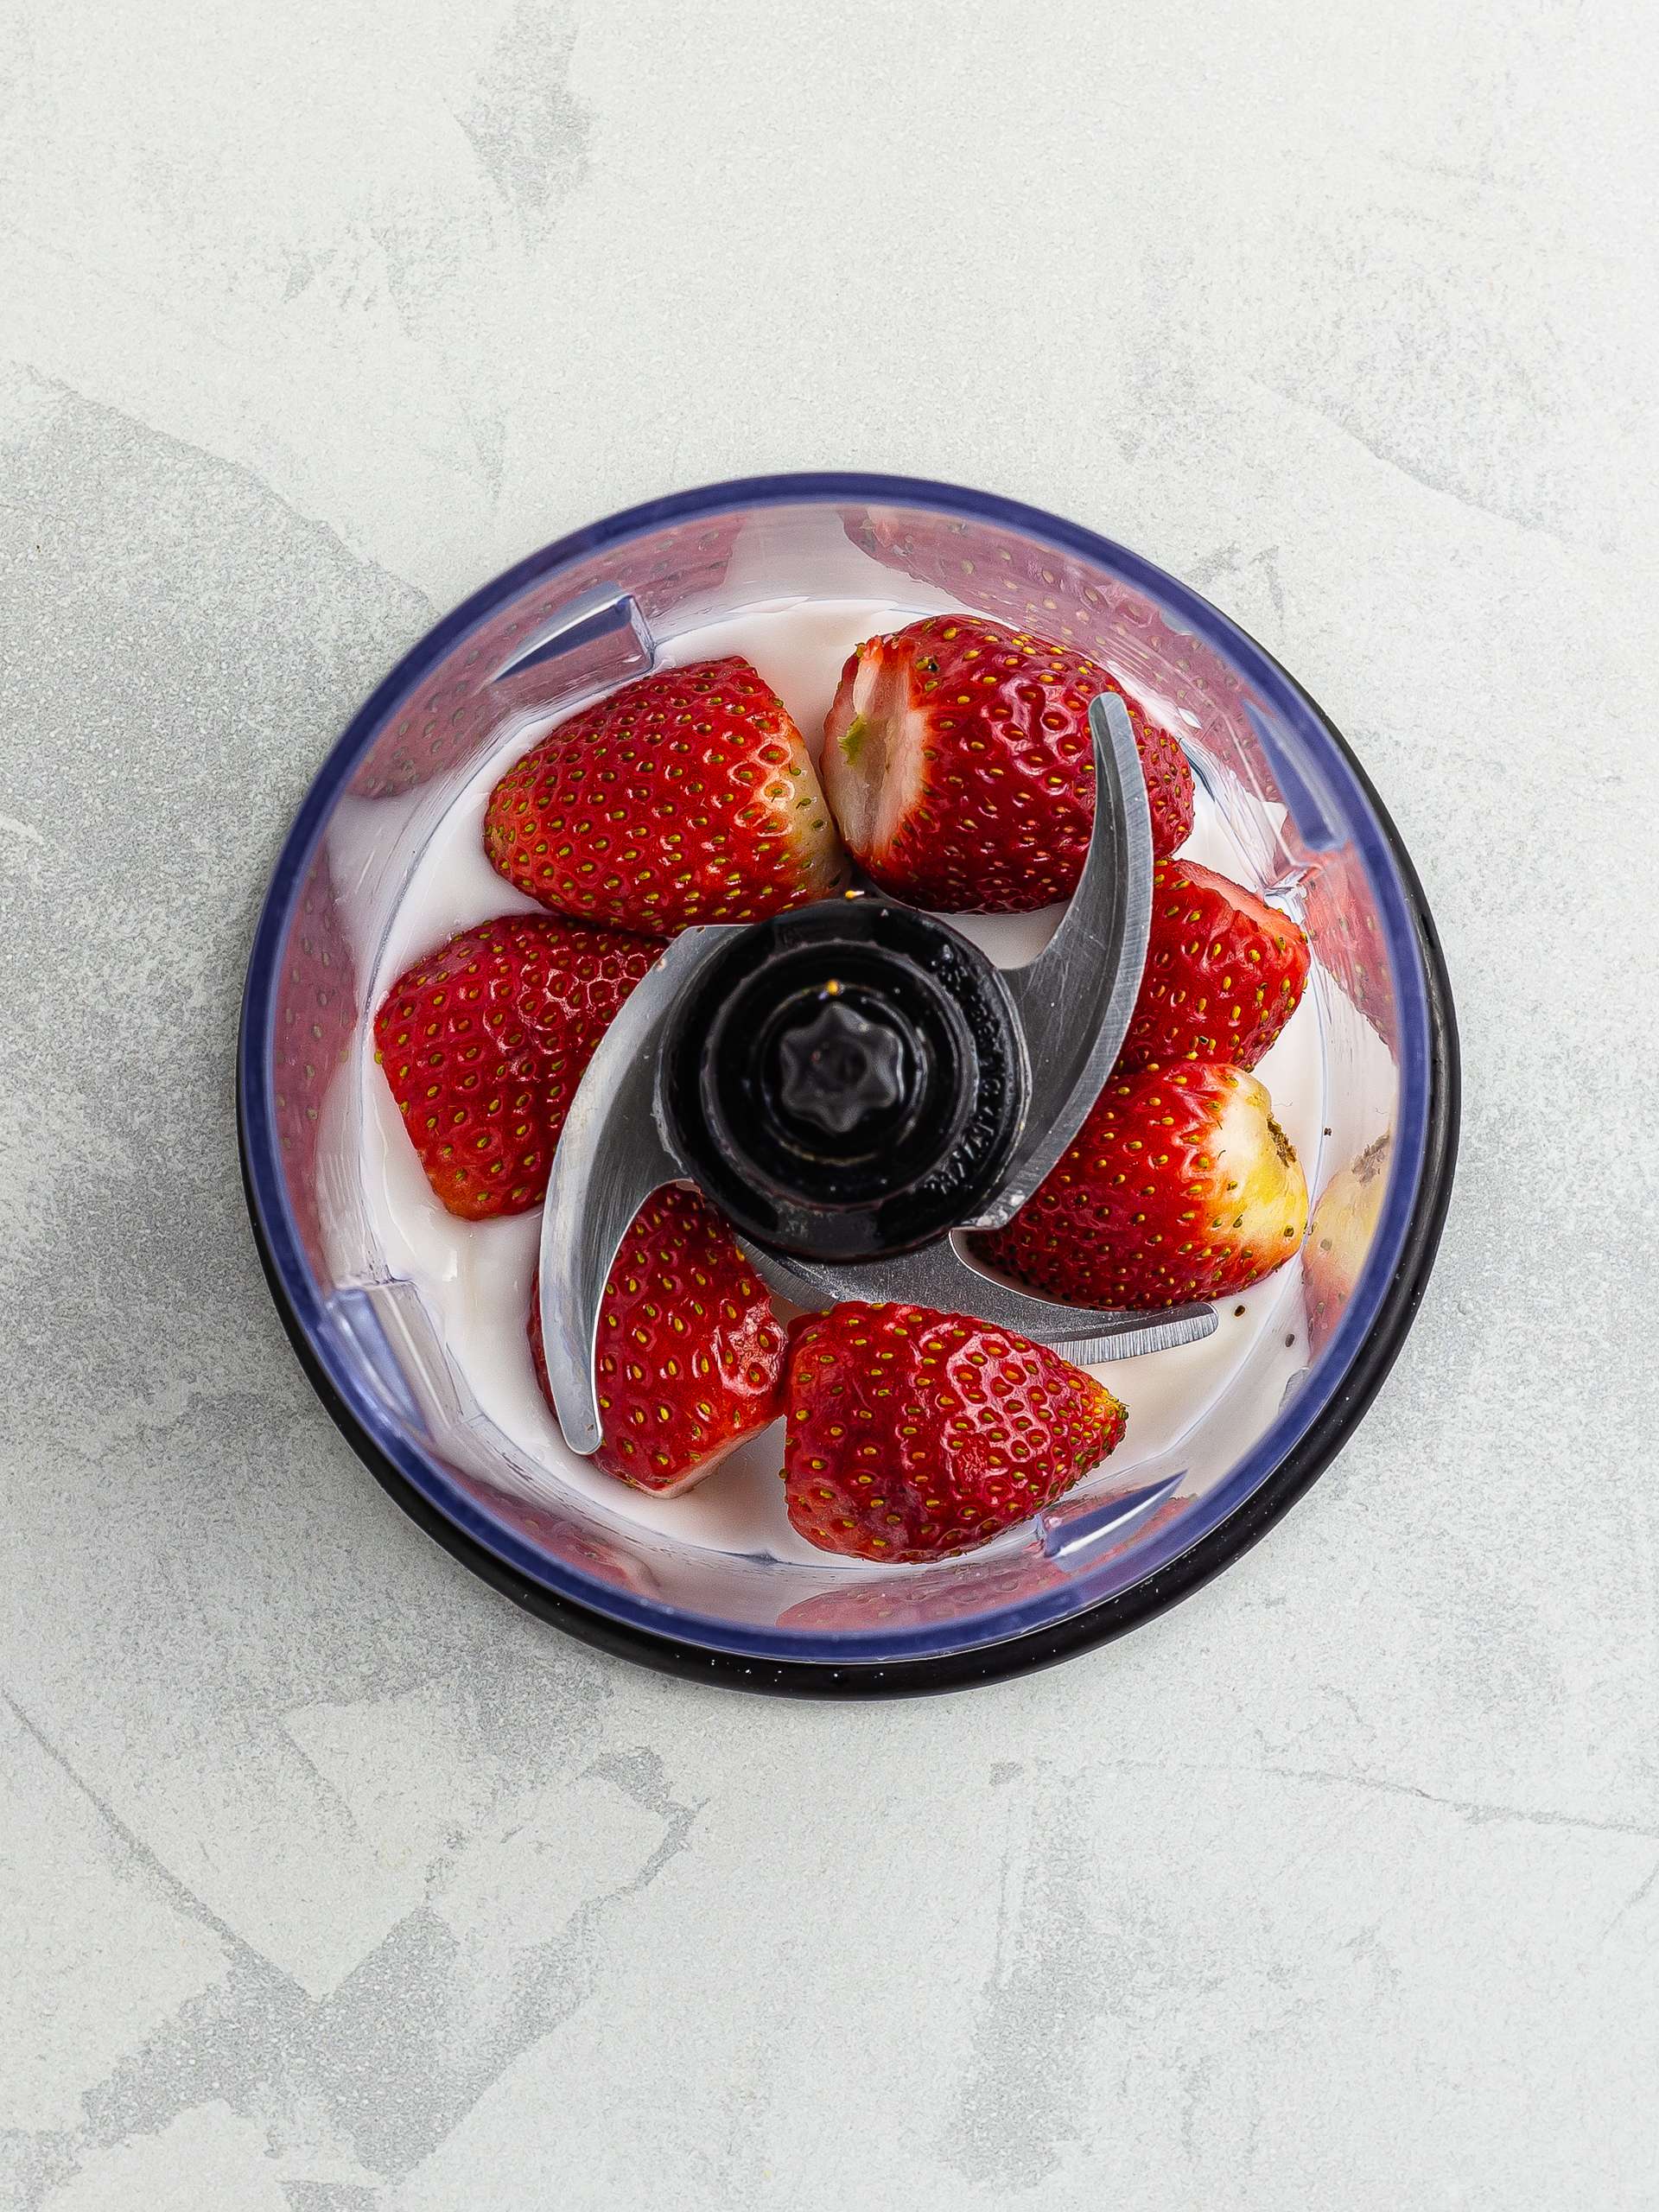 strawberries and yogurt in the blender